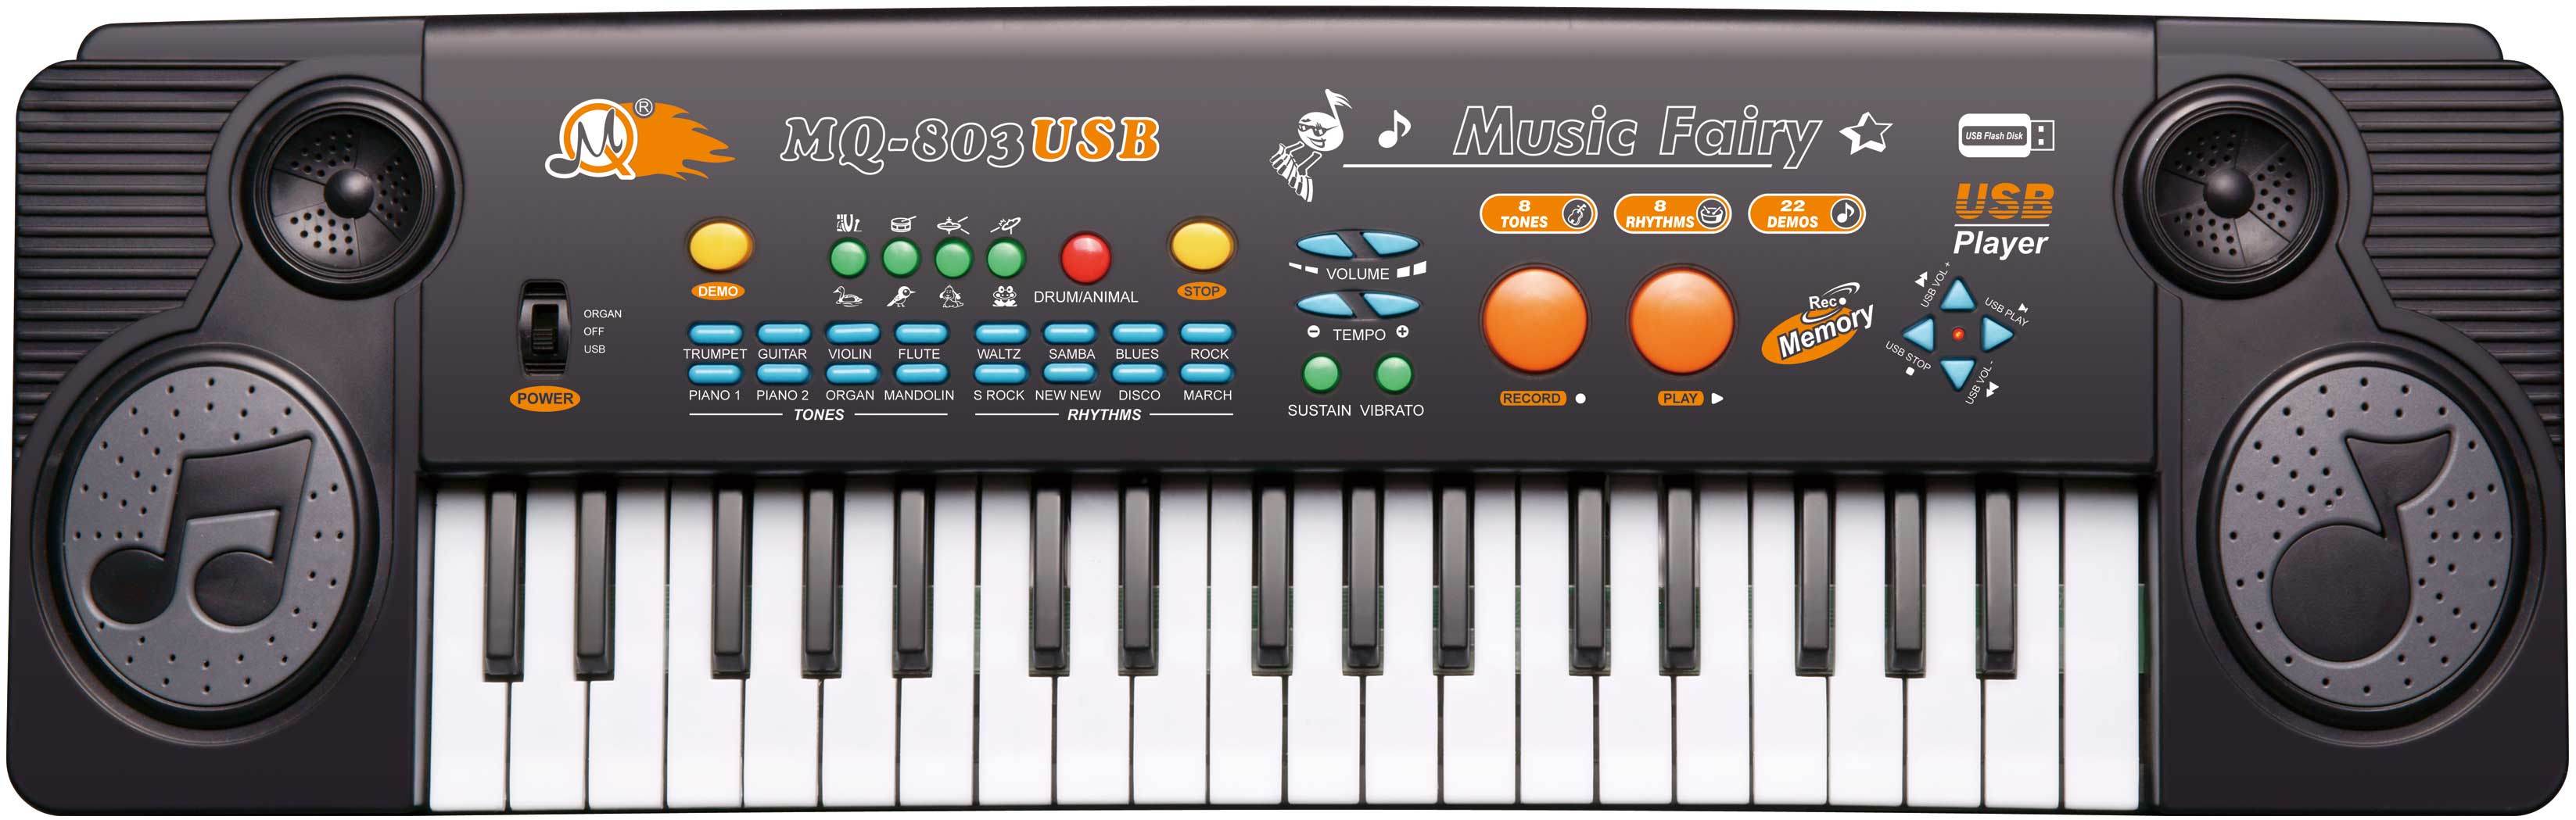 37 Keys Music Keyboard (MQ-803USB)